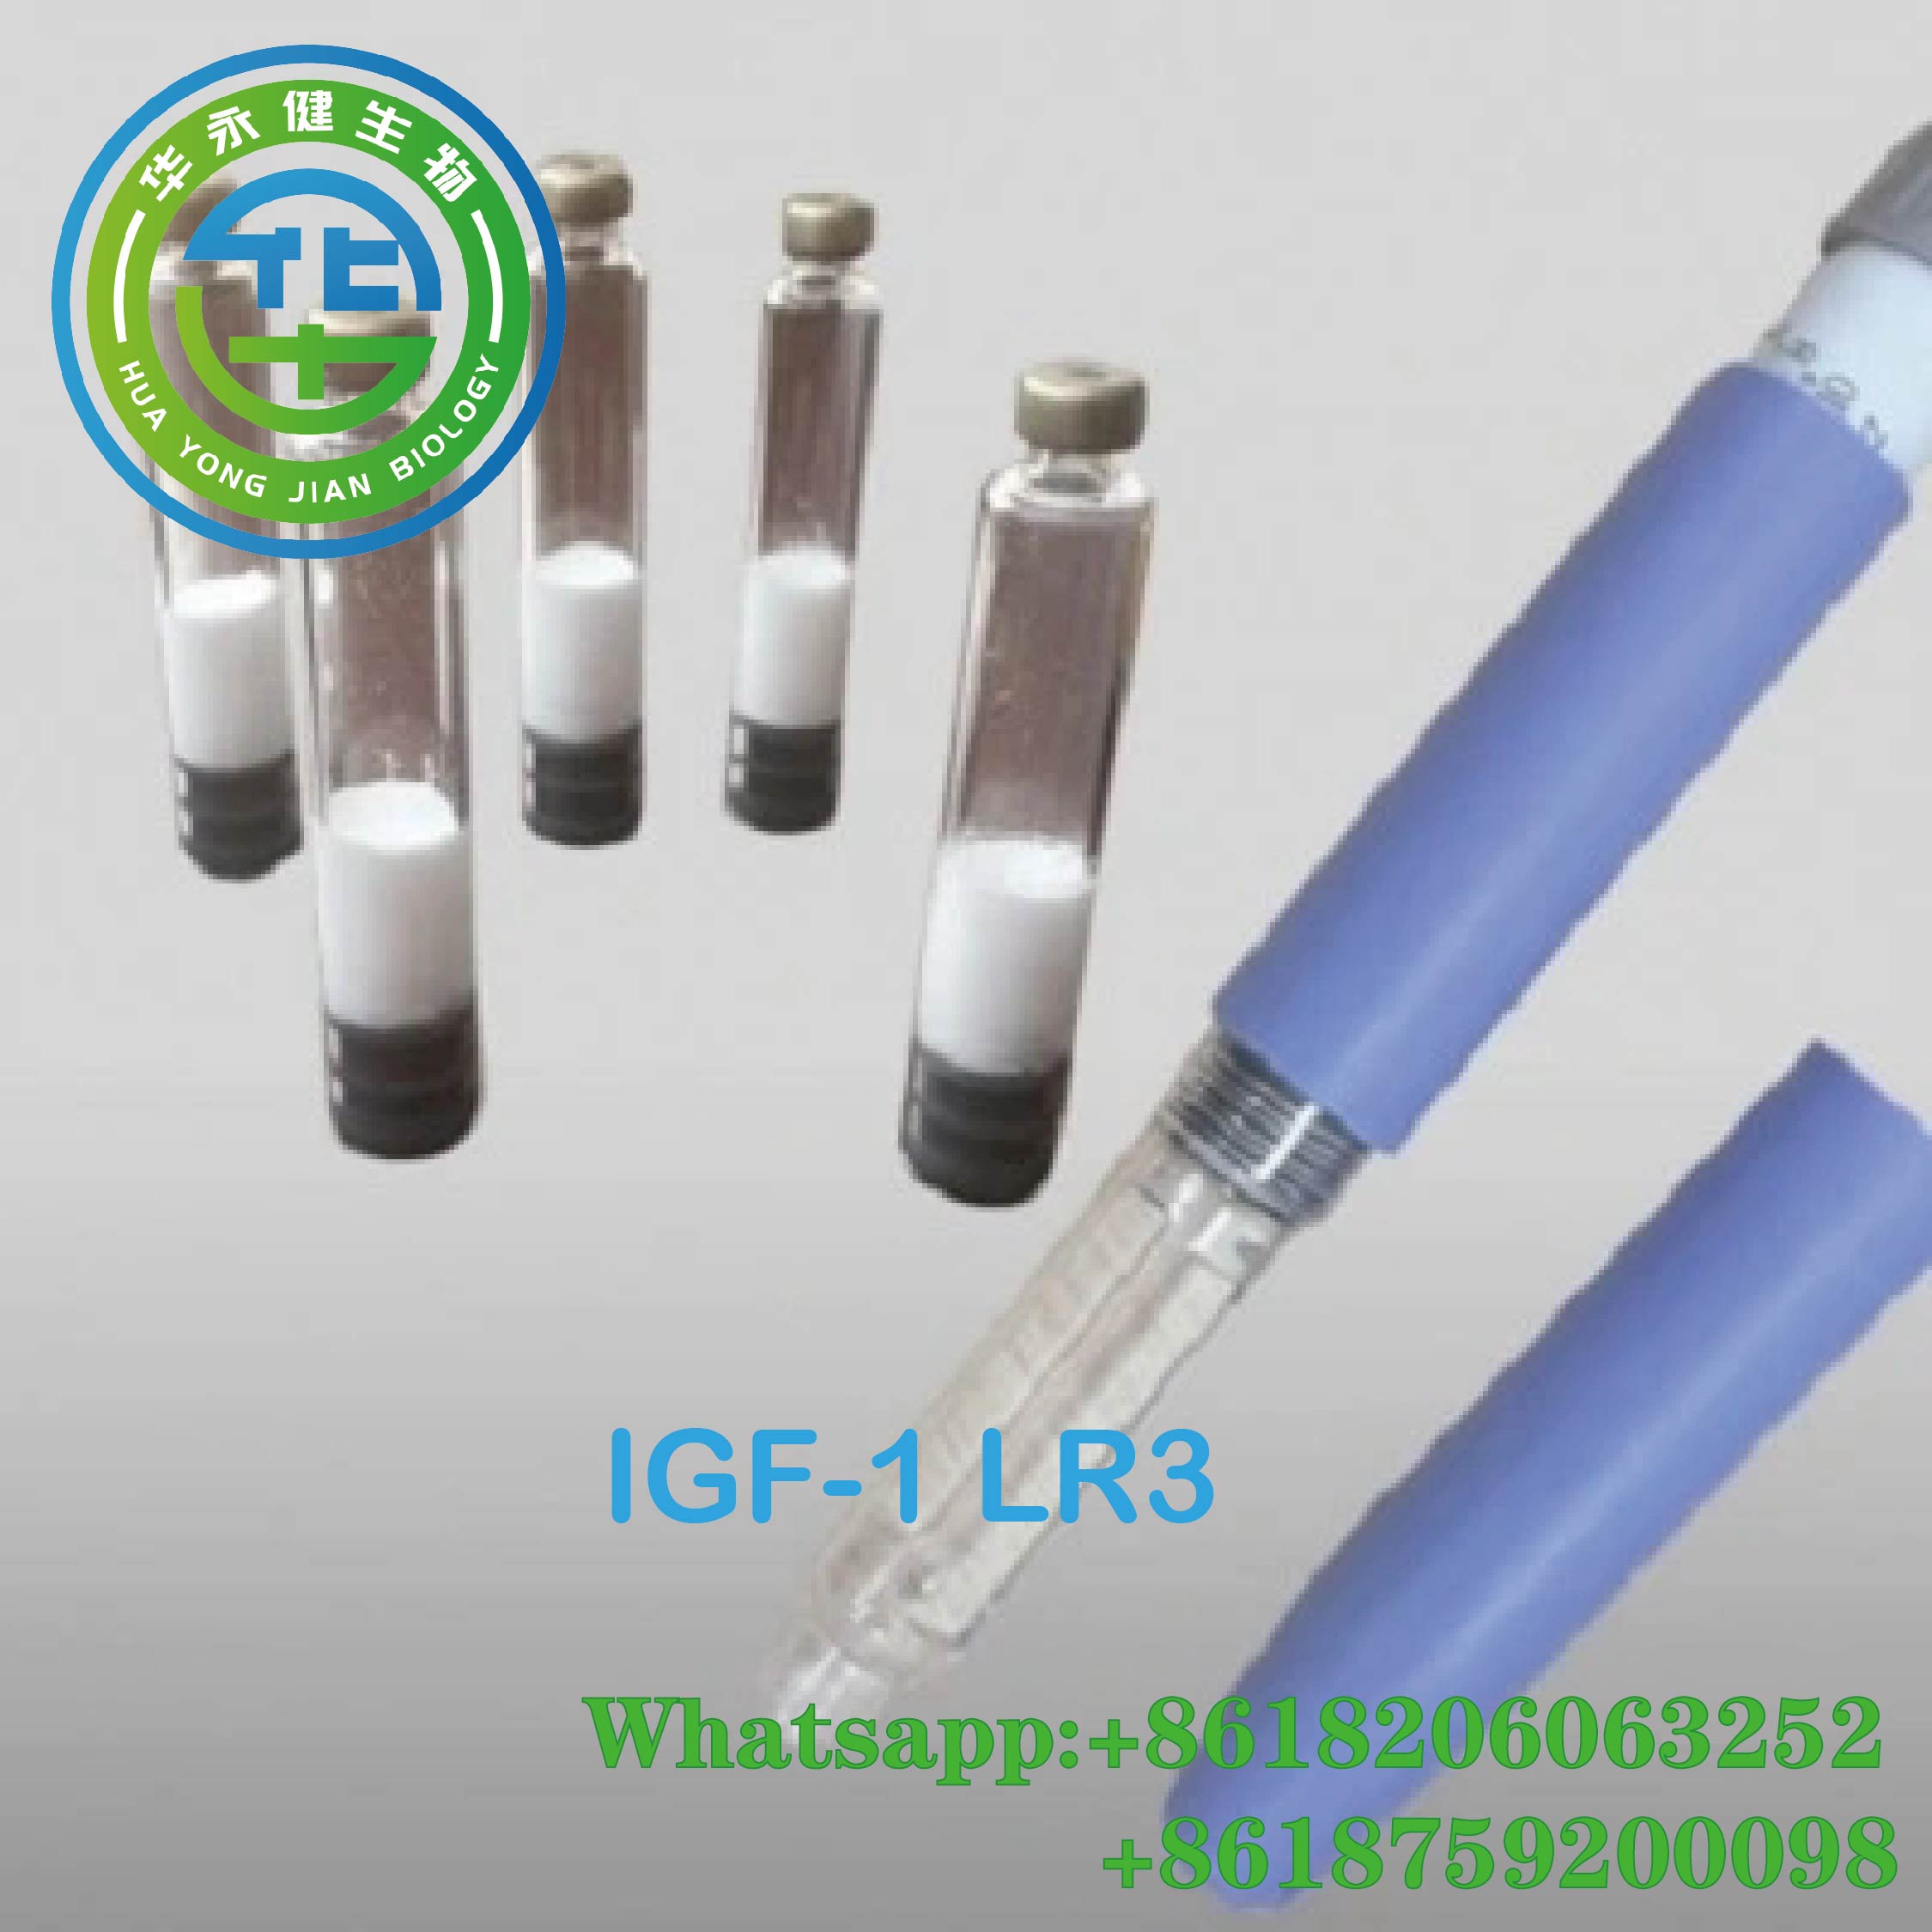 IGF-1 LR3 Anti-Wrinkle Muslce Gaining Peptides 99% Assay 946870-92-4 Anti-Aging